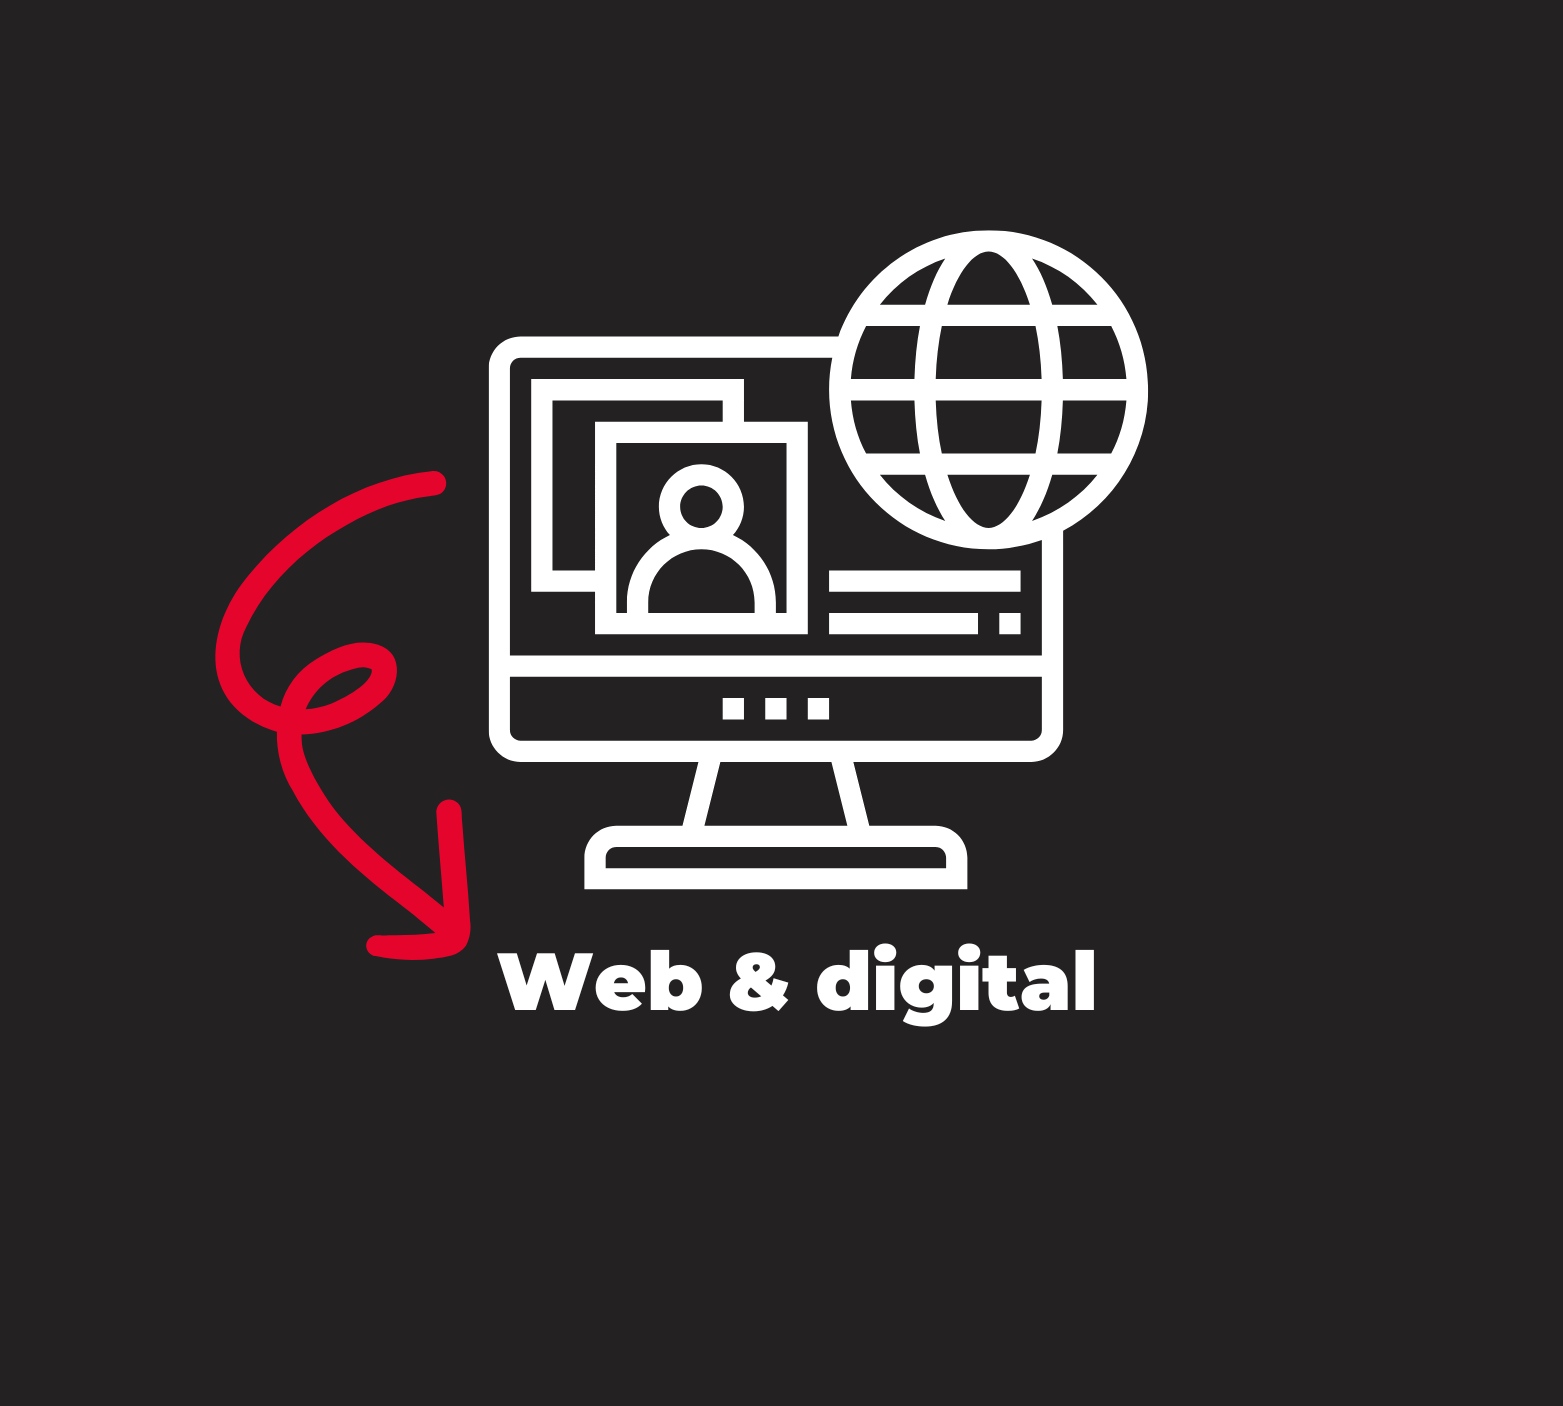 Web & Digital